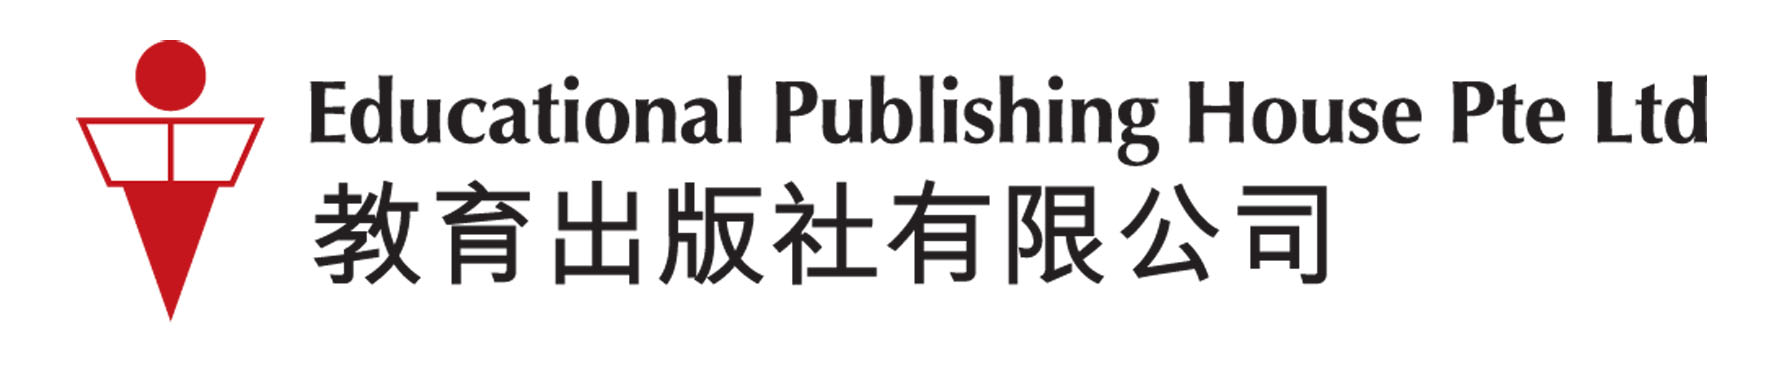 Educational Publishing House Pte Ltd logo